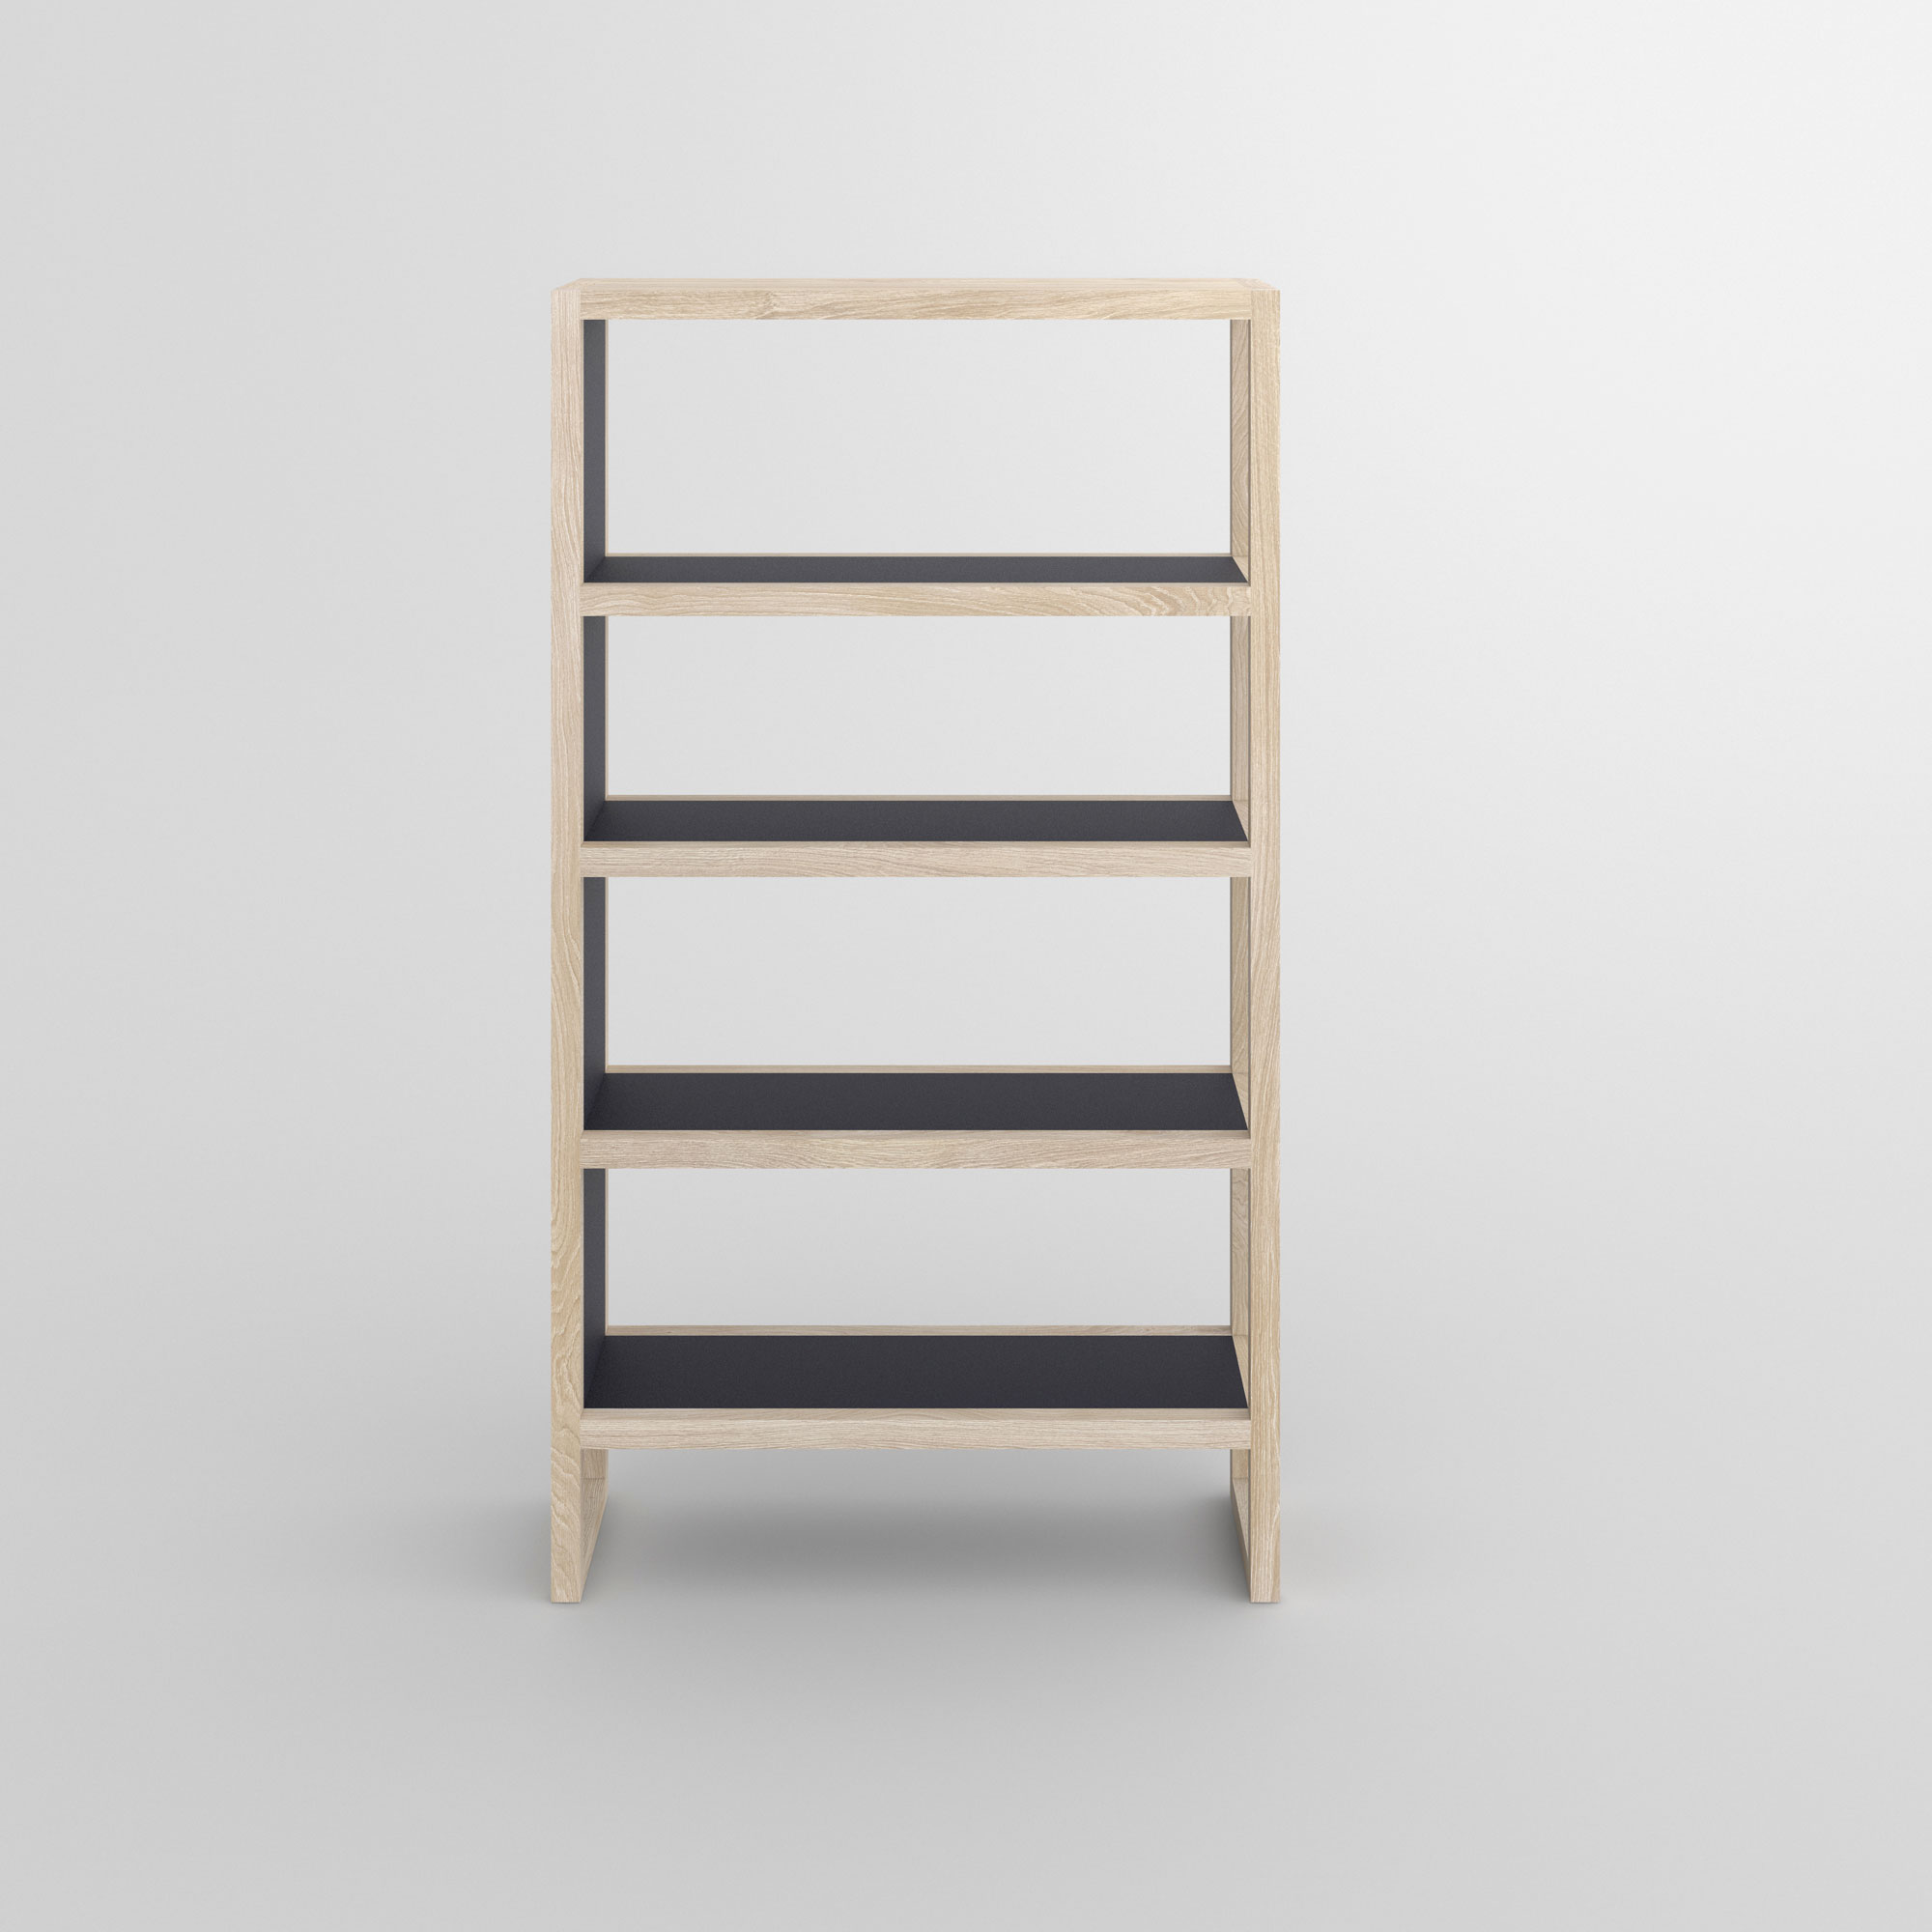 Linoleum Wood Shelf SENA cam2 custom made in solid wood by vitamin design